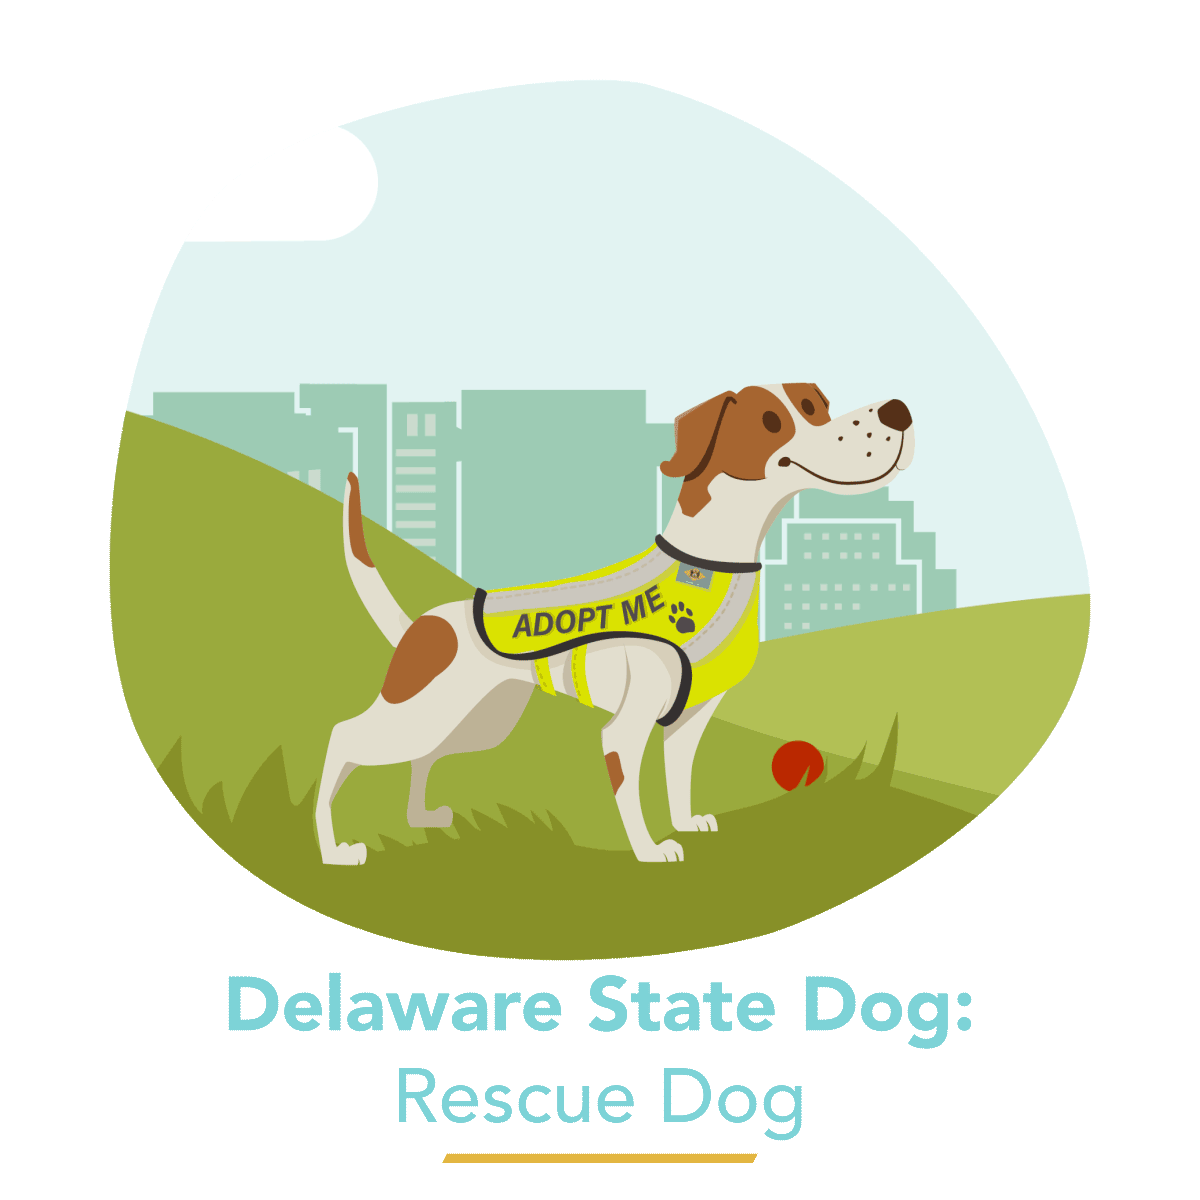 Rescue Dog - Delaware's State Dog